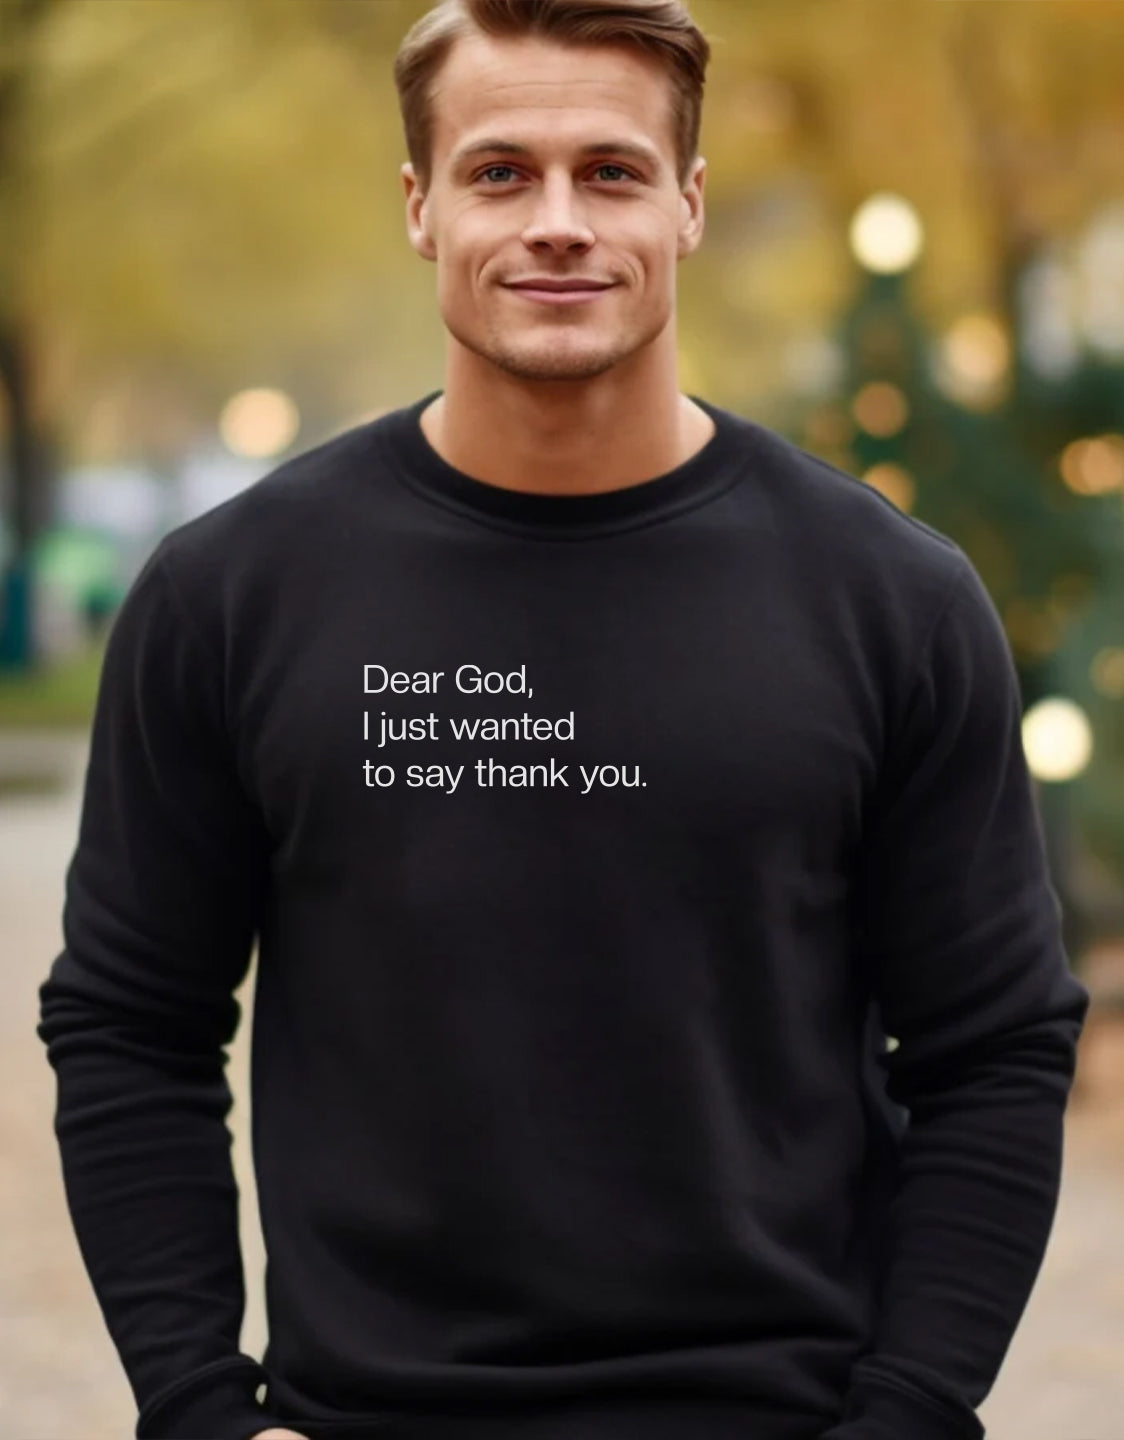 Dear God Sweatshirt - Black - VOTC Clothing